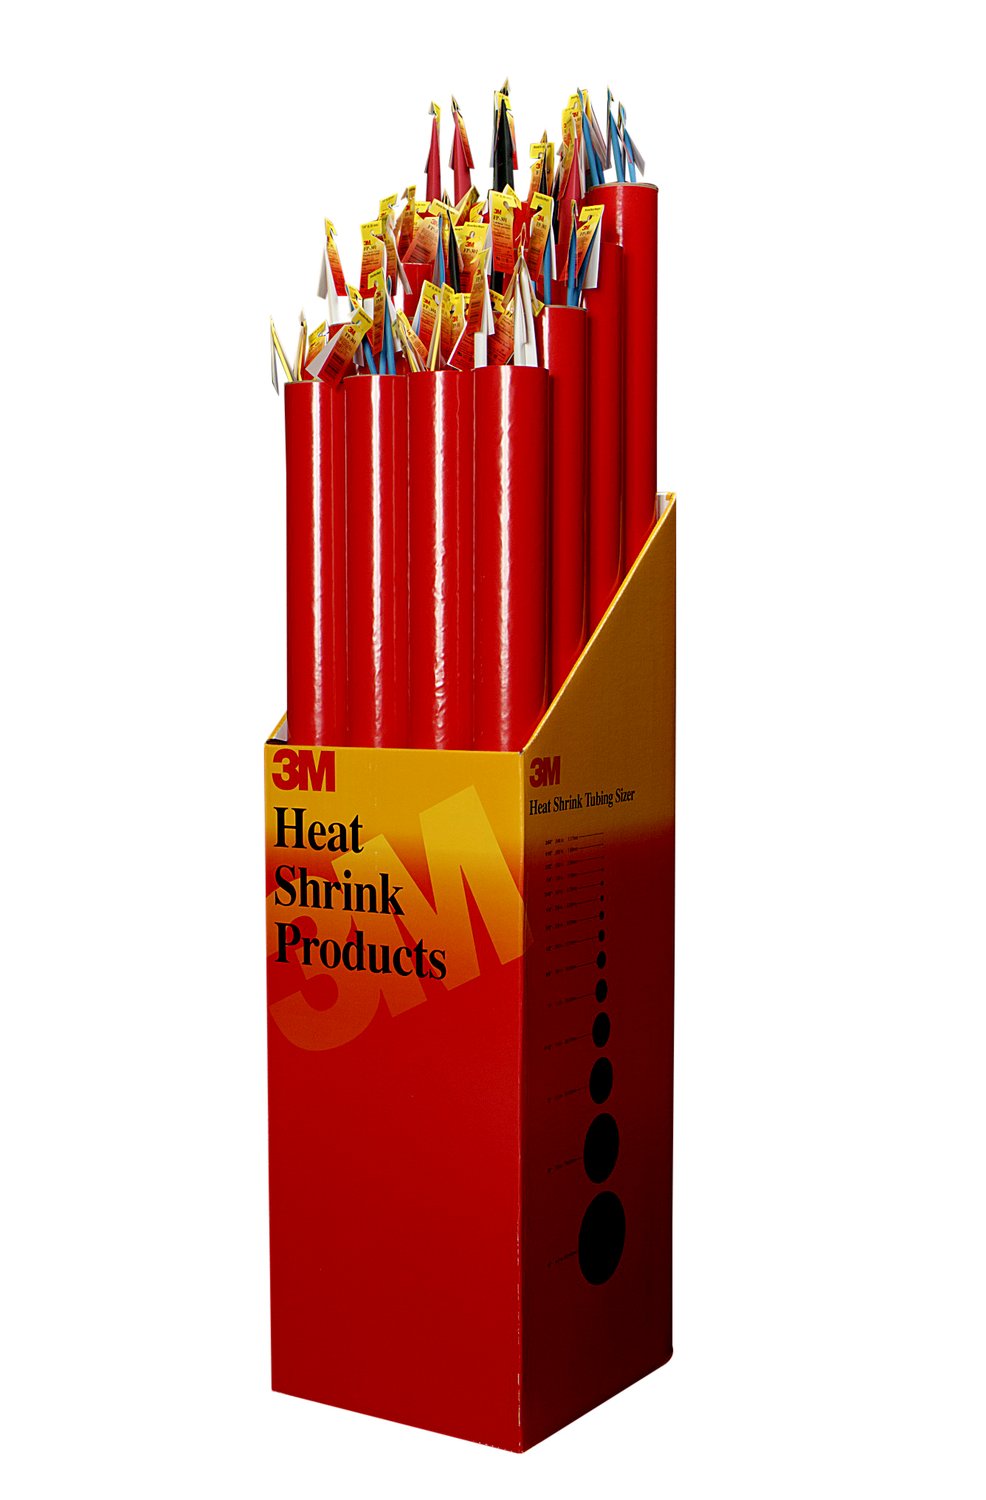 7000133591 - 3M Modified Polyvinylidene Flouride Heat Shrink Tubing
MFP-1/8-48-Clear-Box: 4 ft length sticks, 25 per box, 25/Case